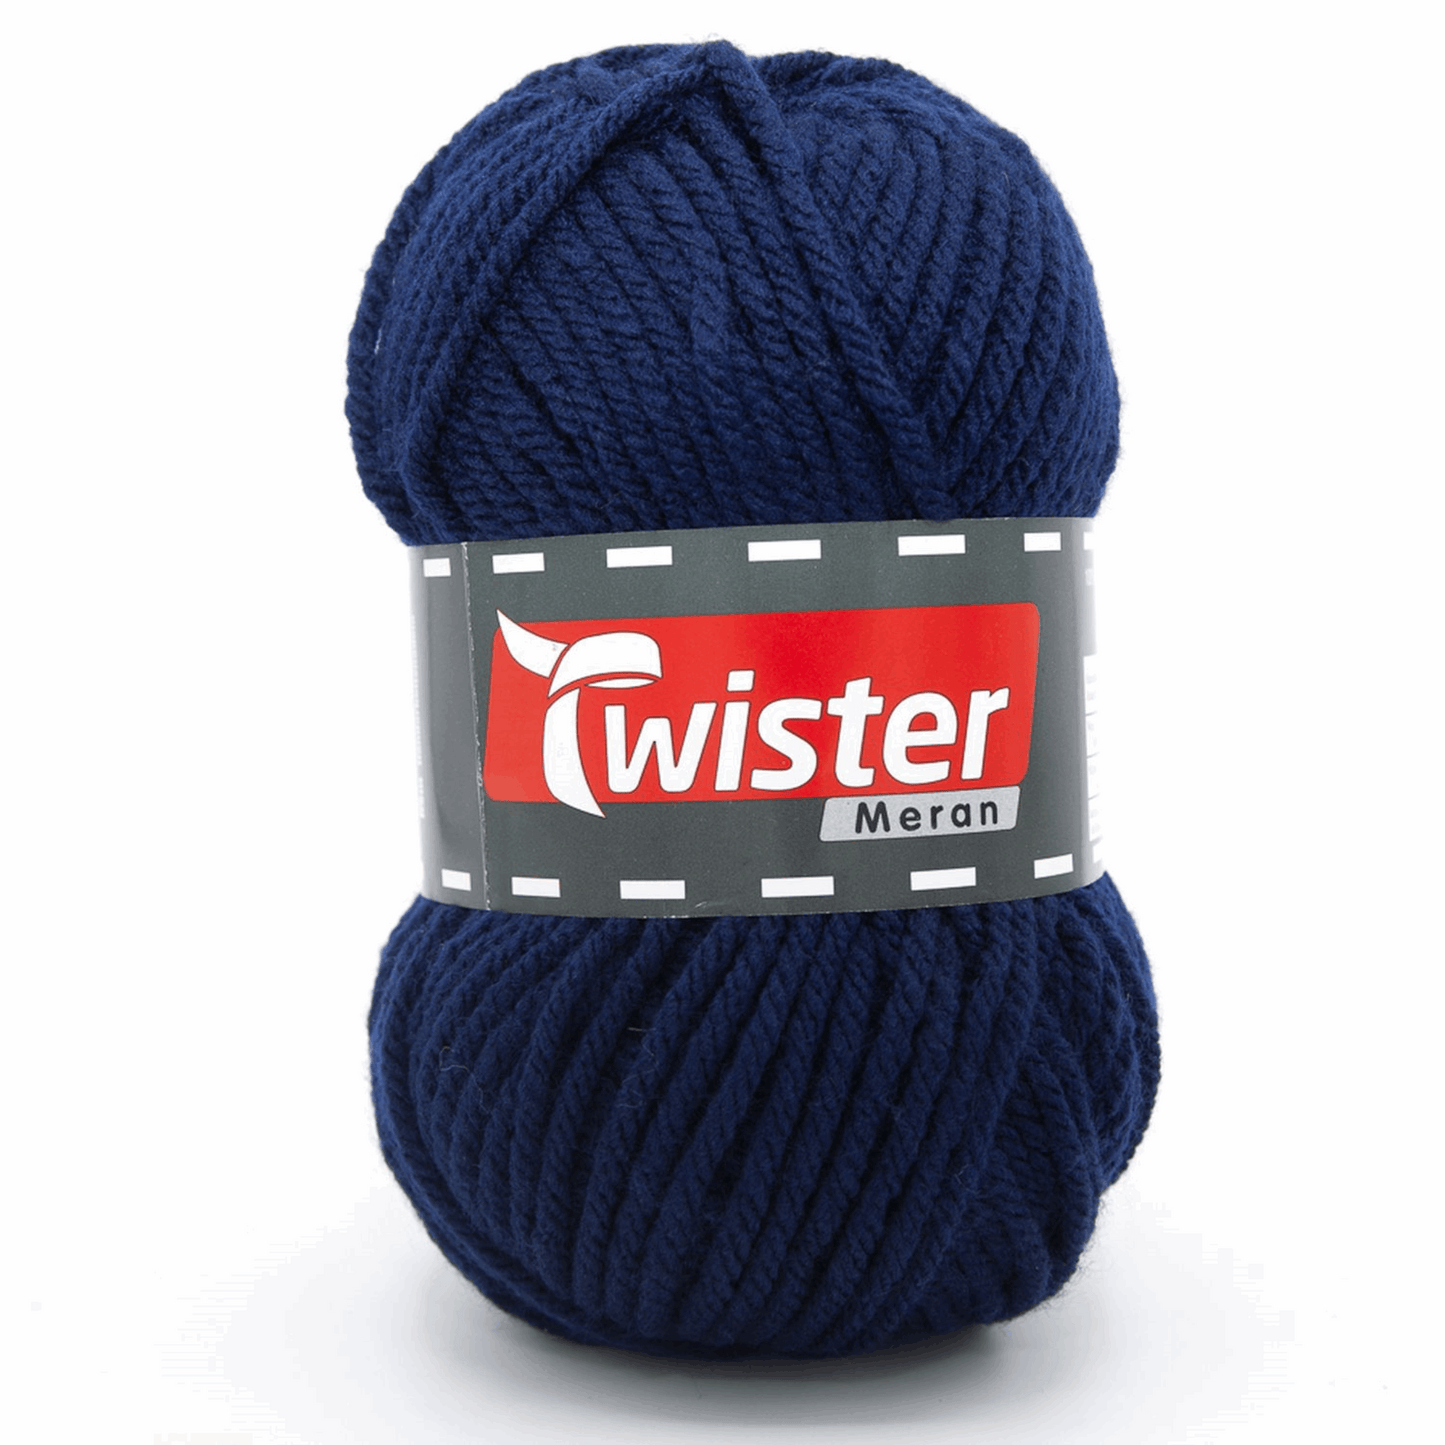 Twister Meran 100g, 98534, Farbe marine 59